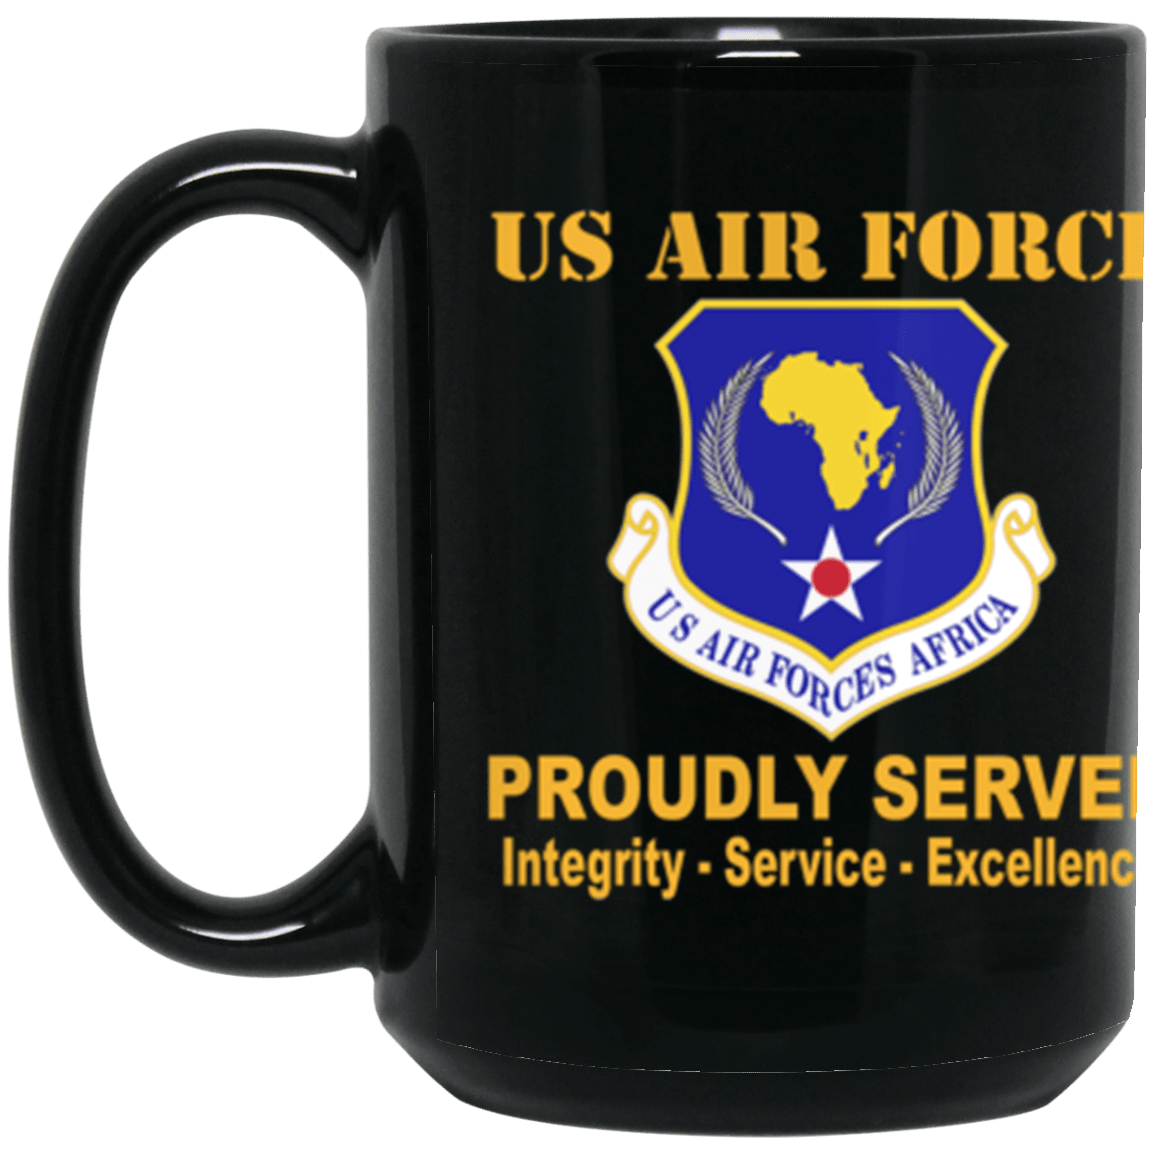 US Air Force Security Police Proudly Served Core Values 15 oz. Black Mug-Mug-USAF-Veterans Nation